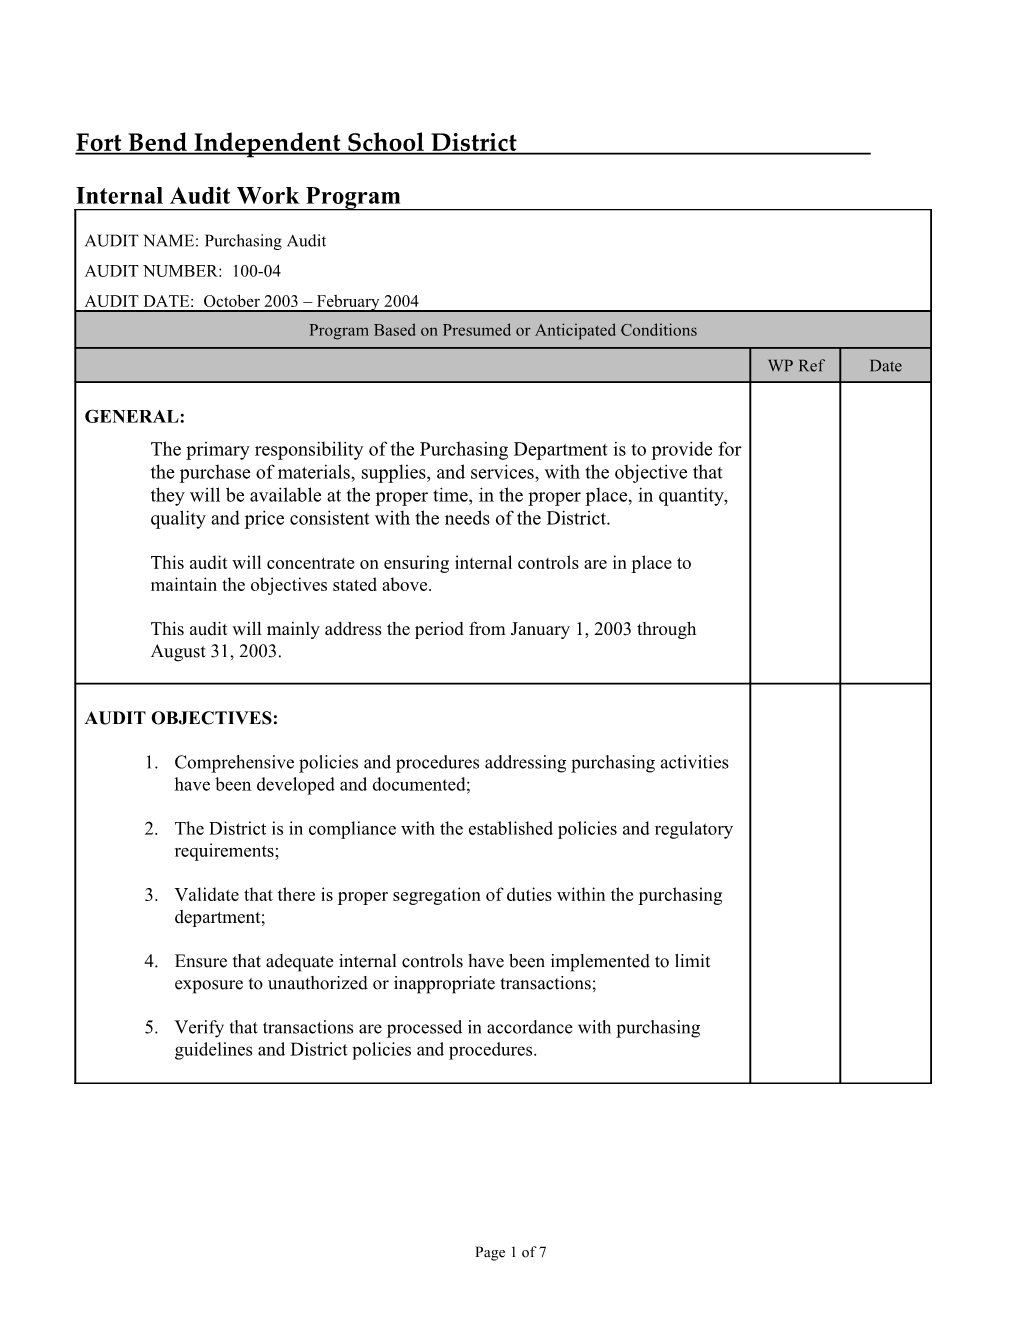 Internal Audit Work Program